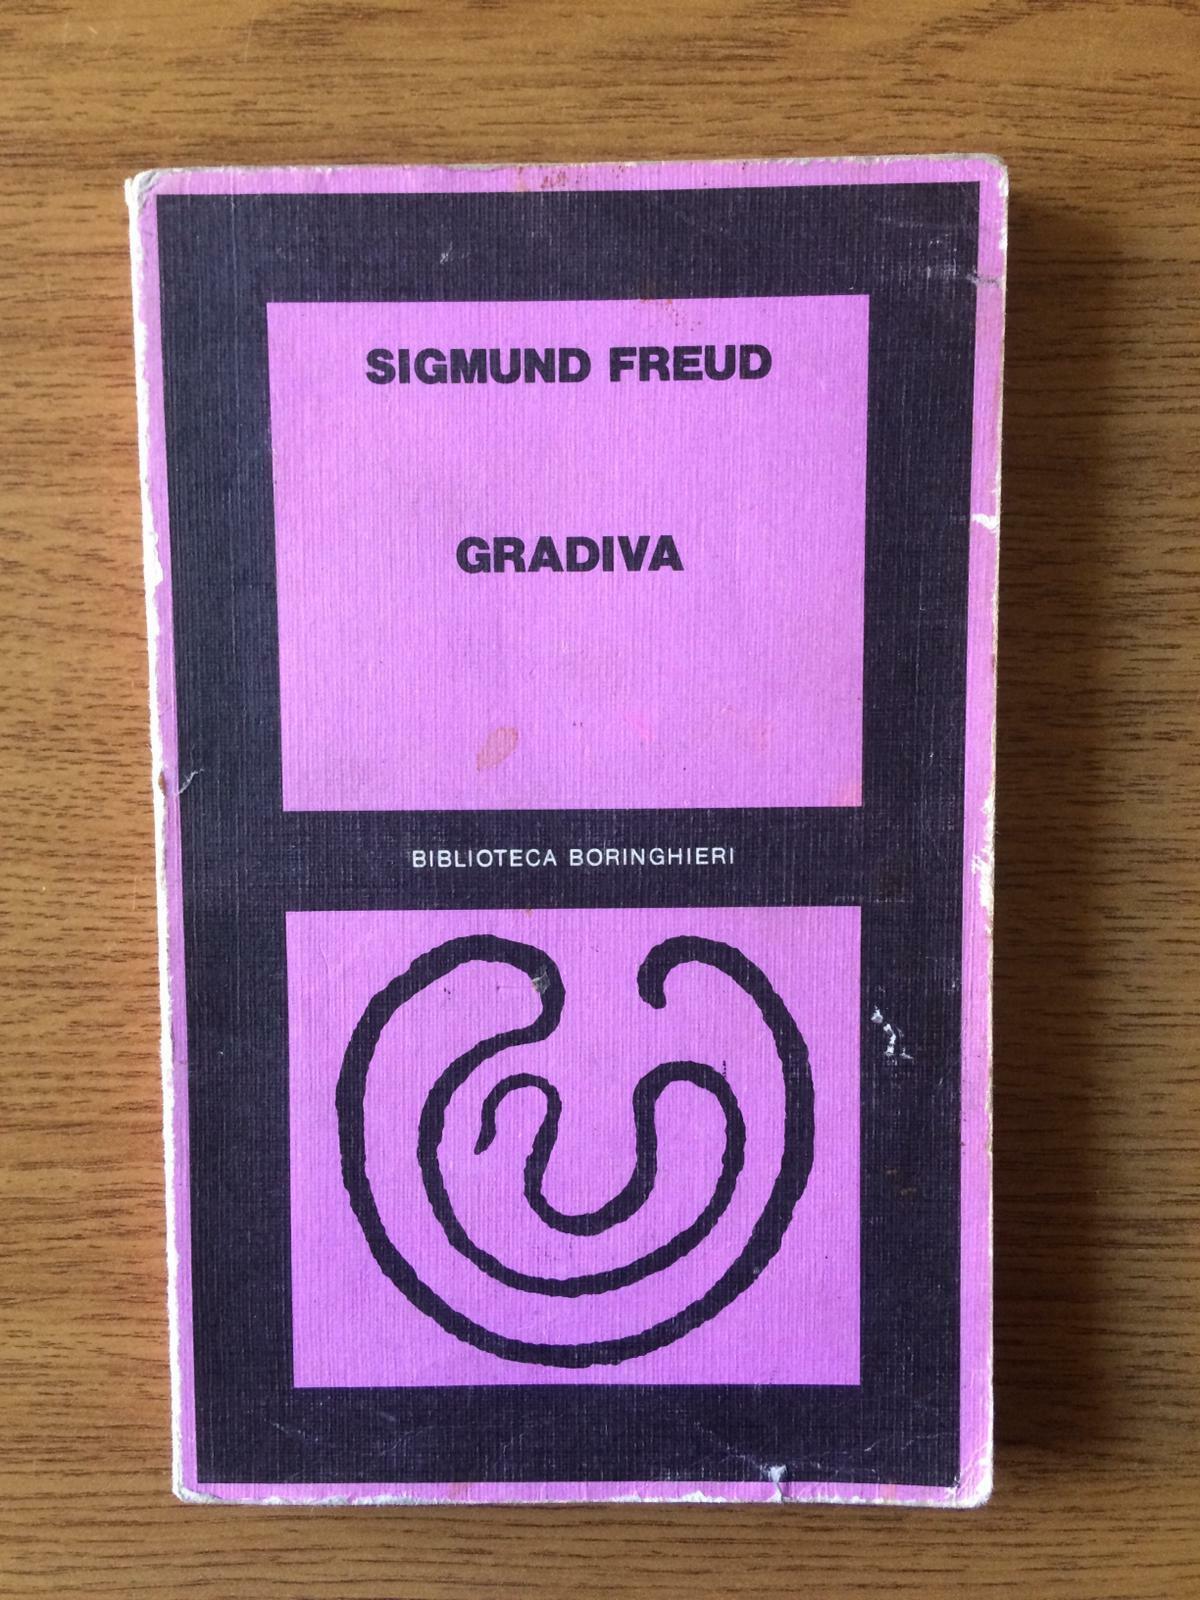 Gradiva - Sigmund Freud - Biblioteca Boringhieri - 1977 - AR